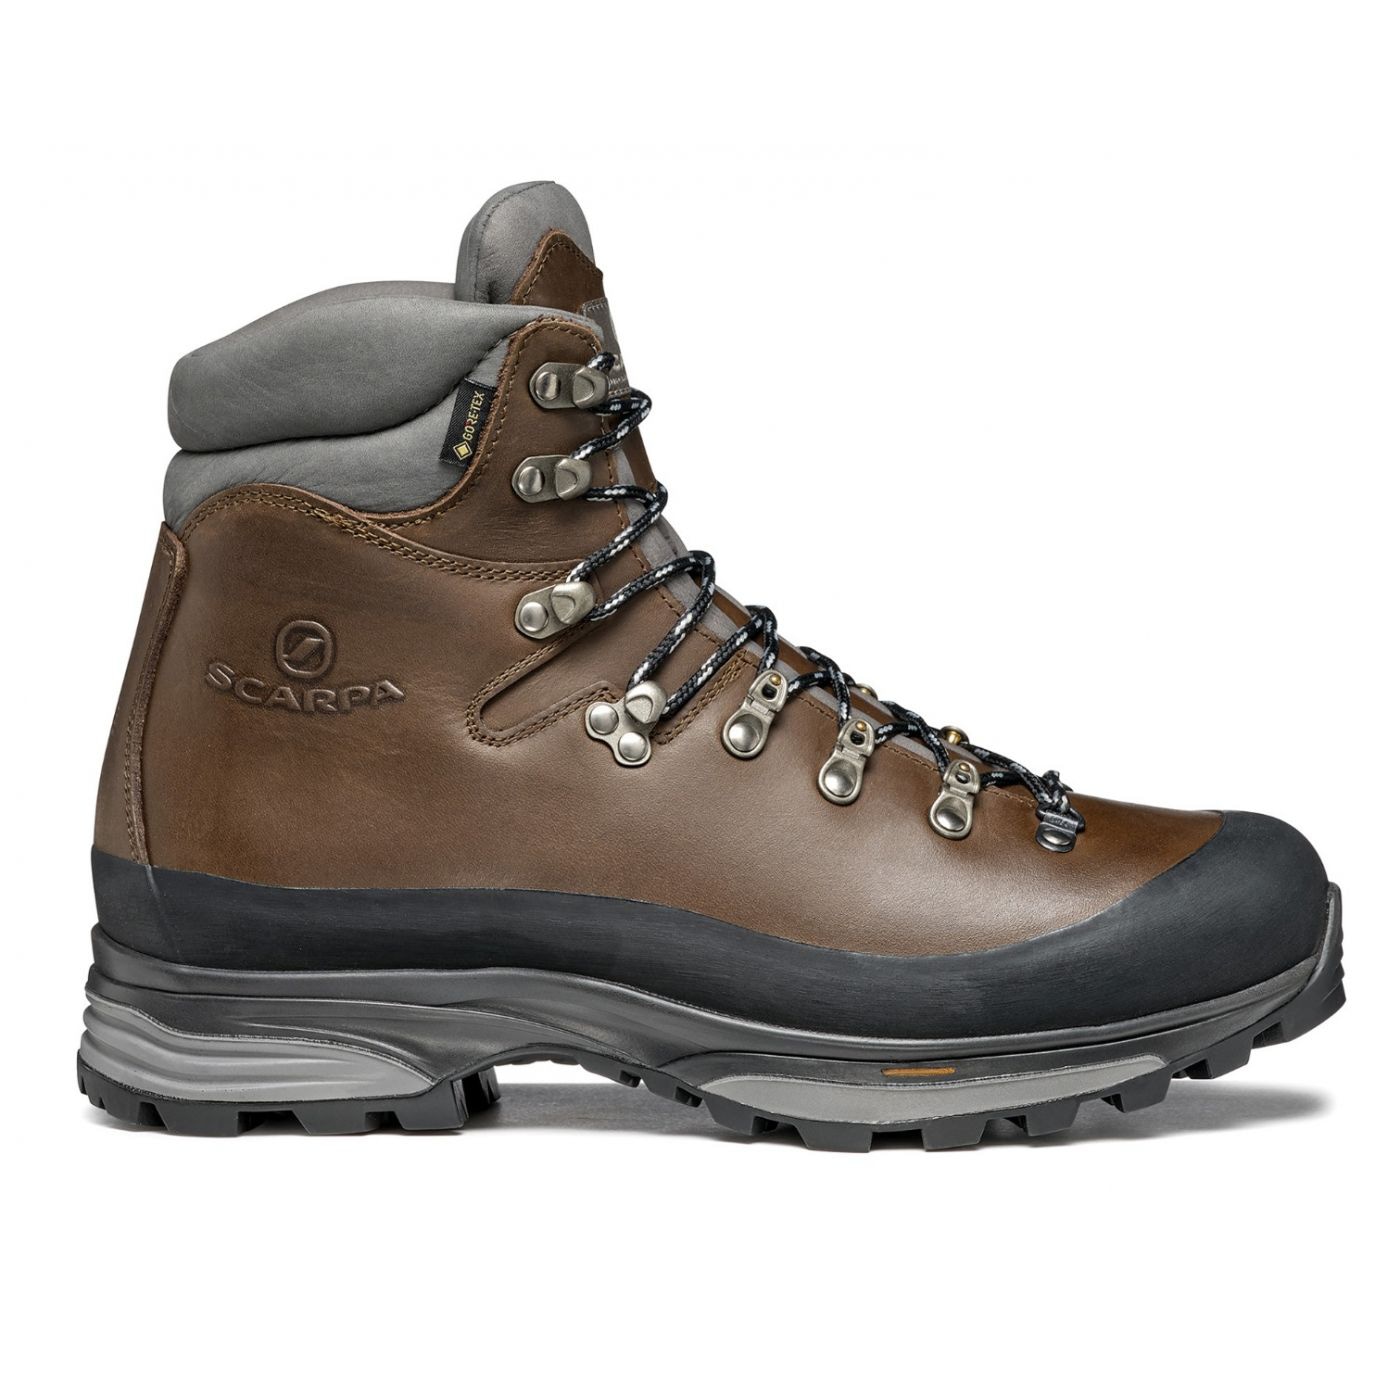 Men's Kinesis Pro Gore-Tex Hiking Boots